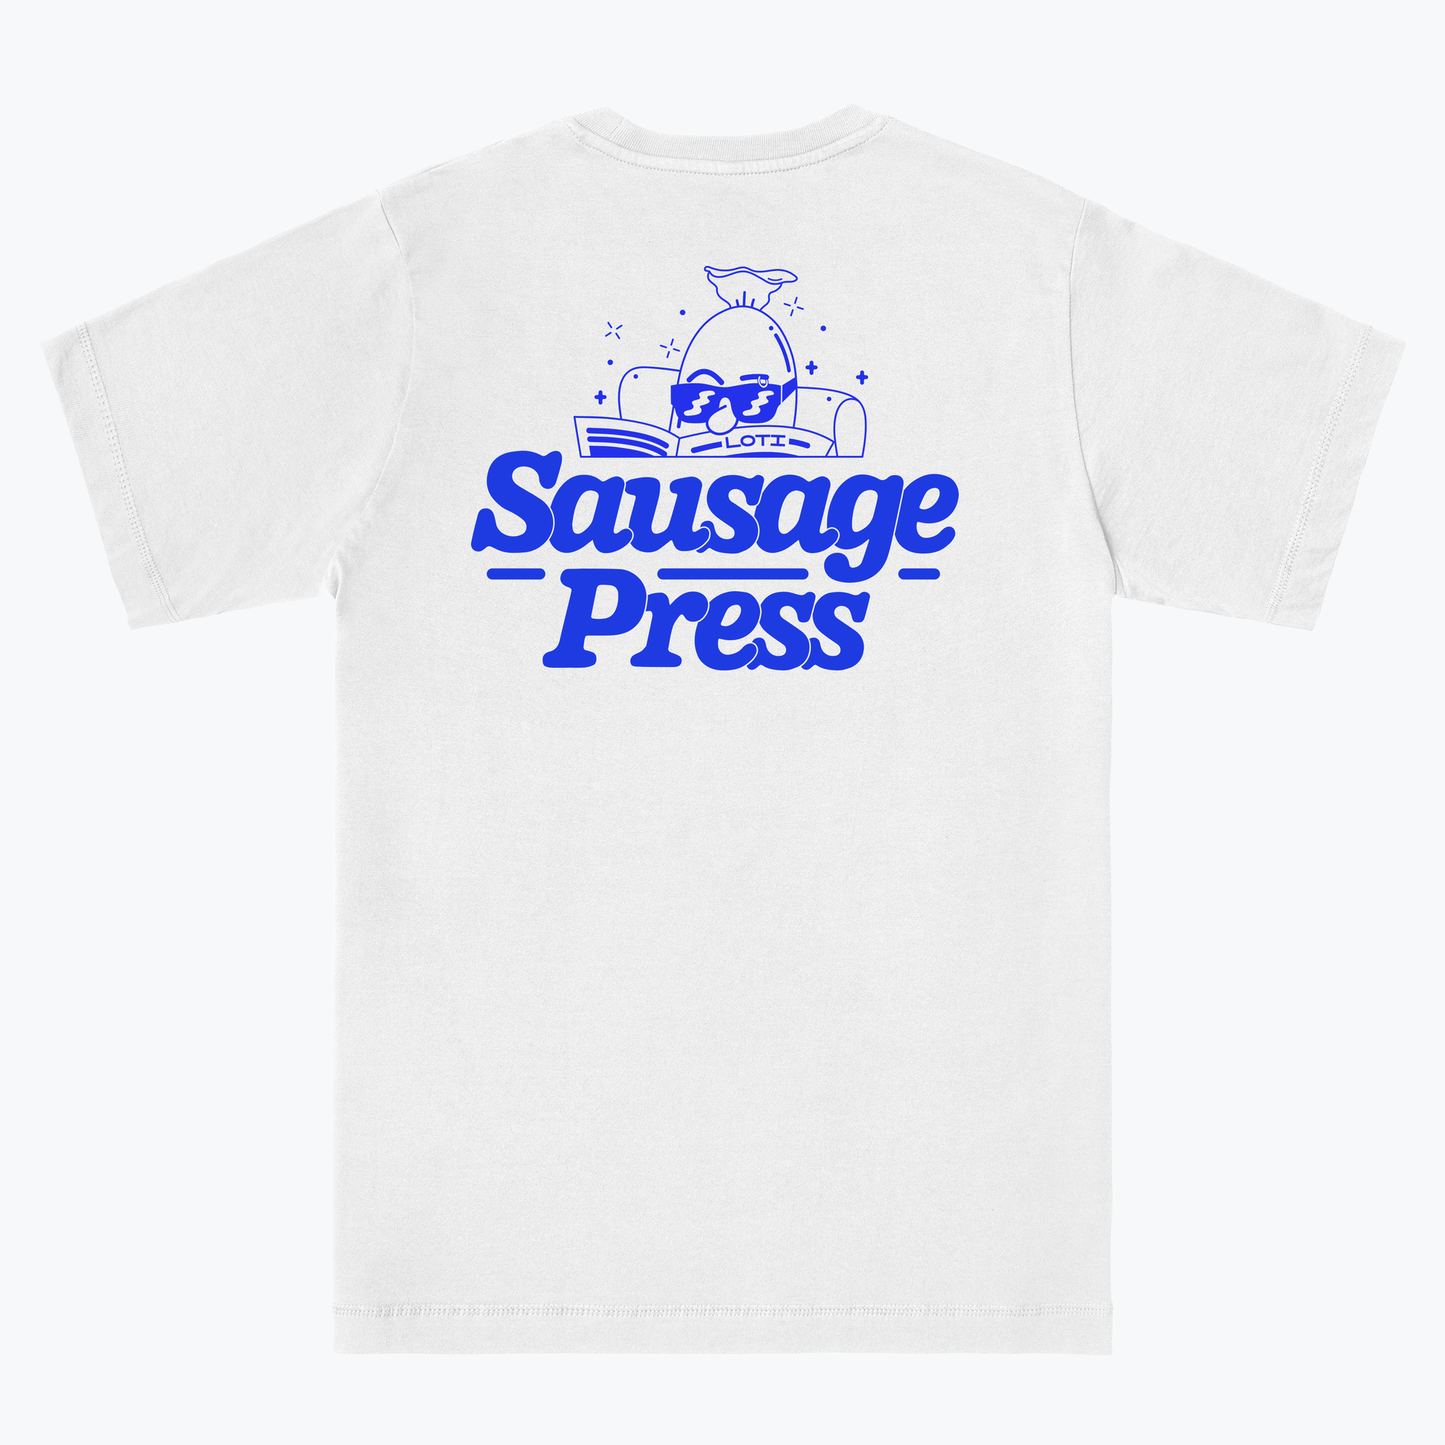 Sausage Press Gift Card